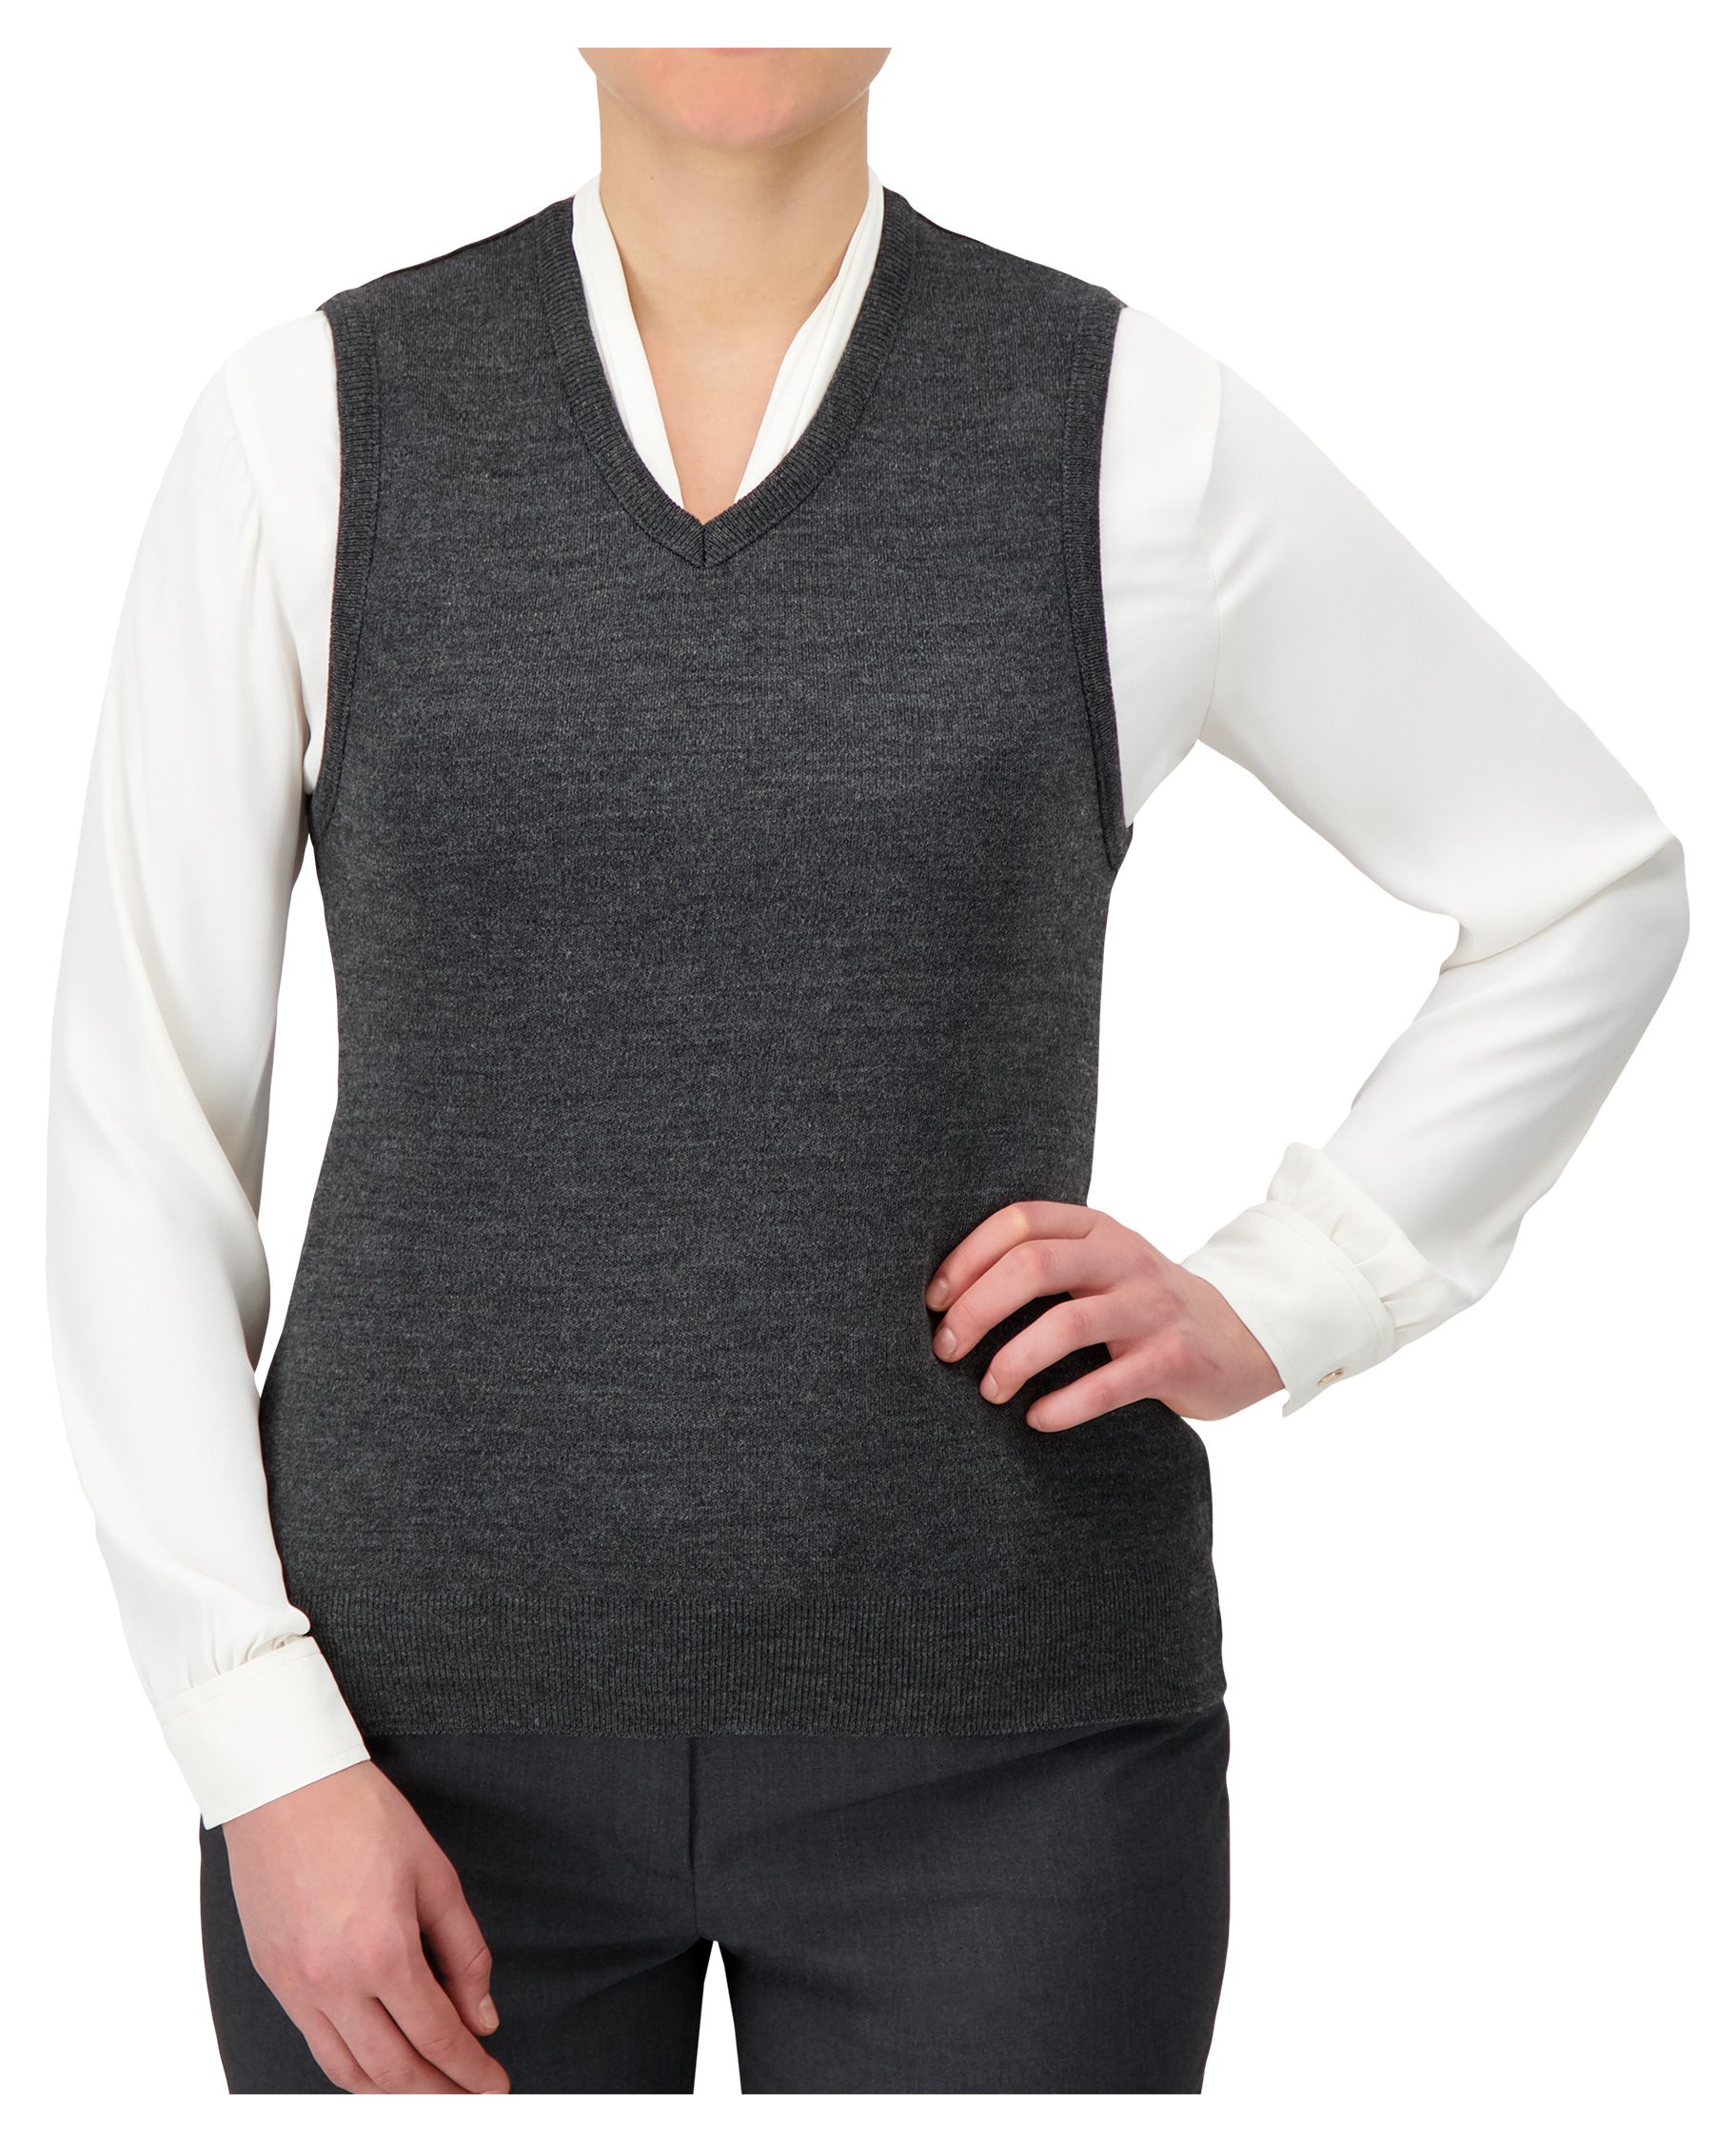 Cobmex Ladies "Cashmere"-Like V-Neck Vest #3109 Executive Grey